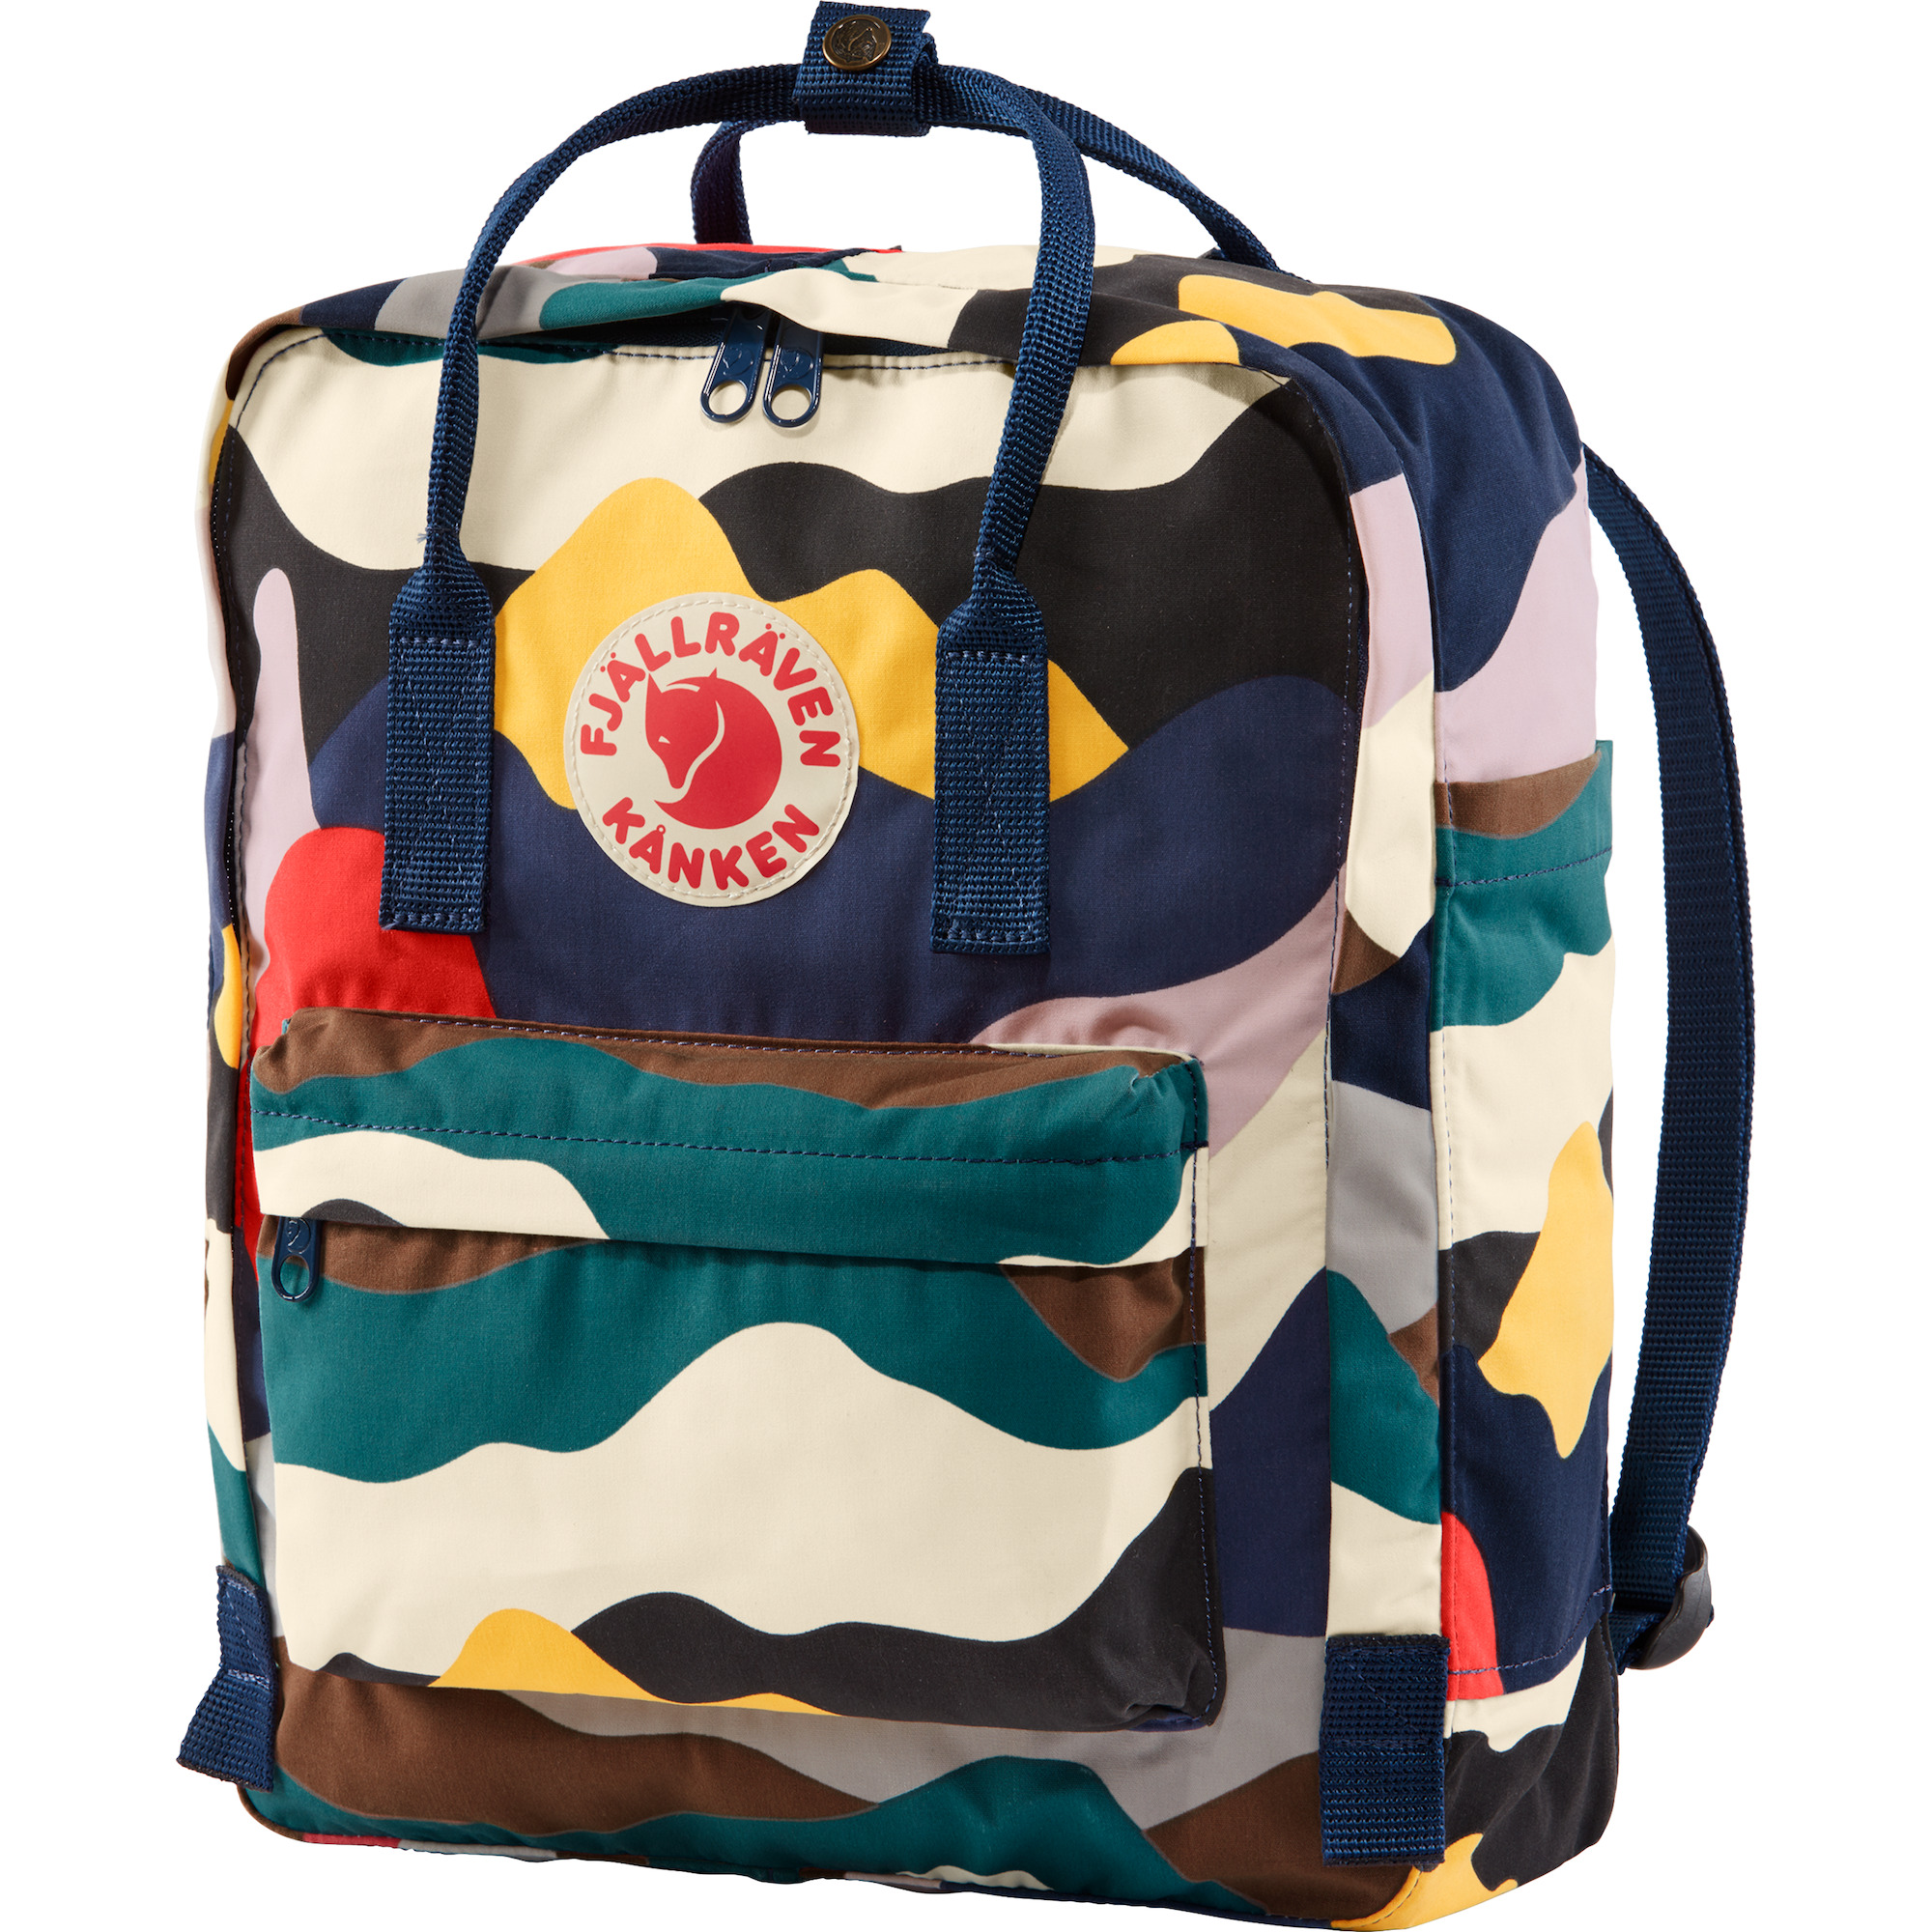 kanken backpack as diaper bag